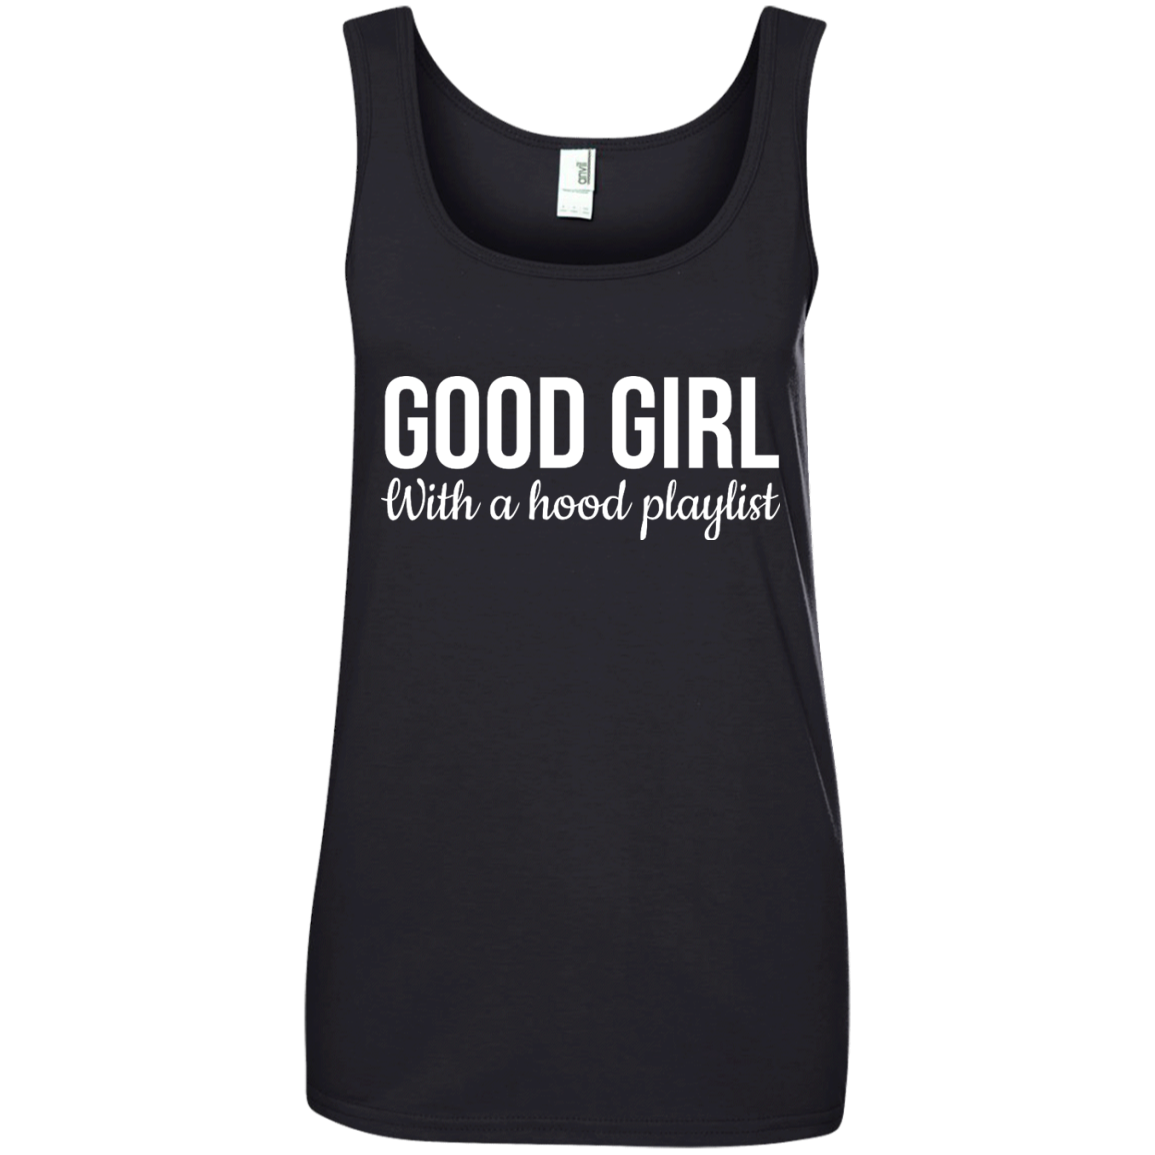 Good girl with a hood playlist tank top, t-shirt